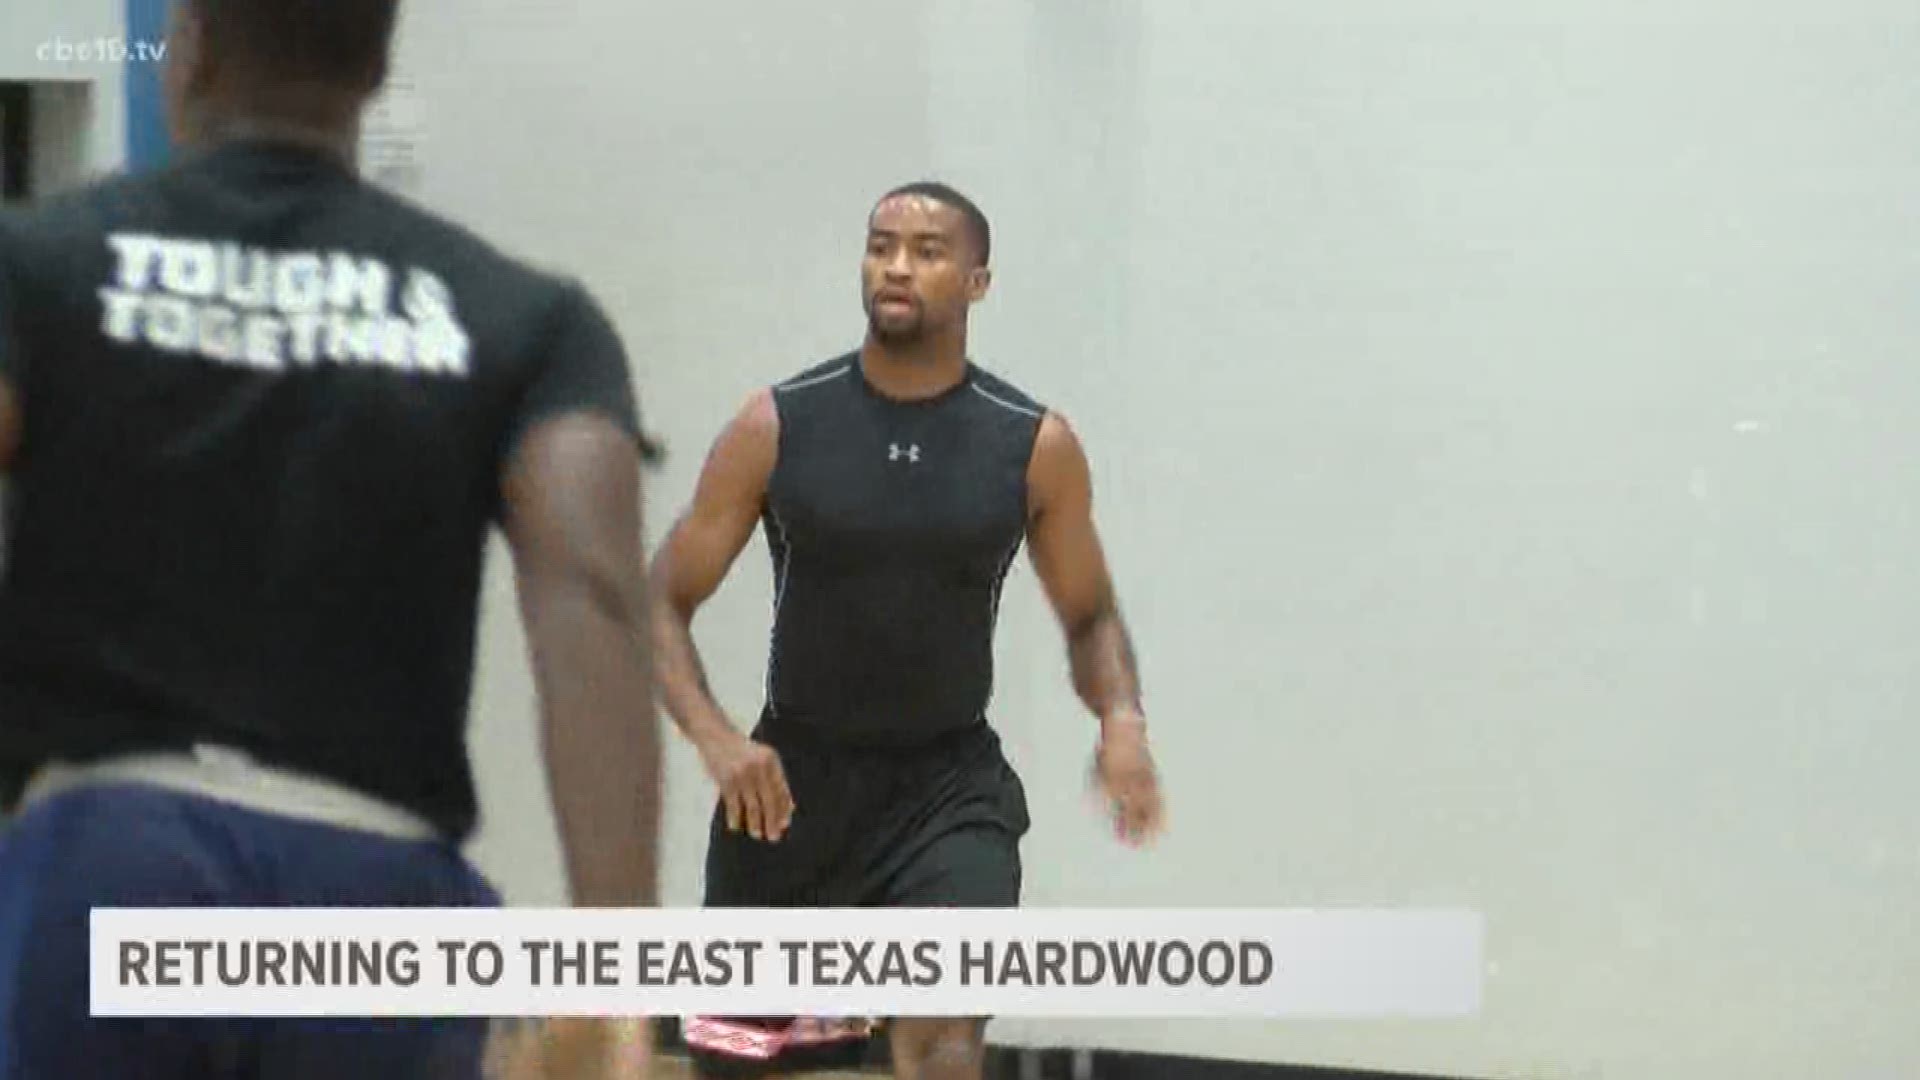 Star basketball players return to the East Texas hardwood